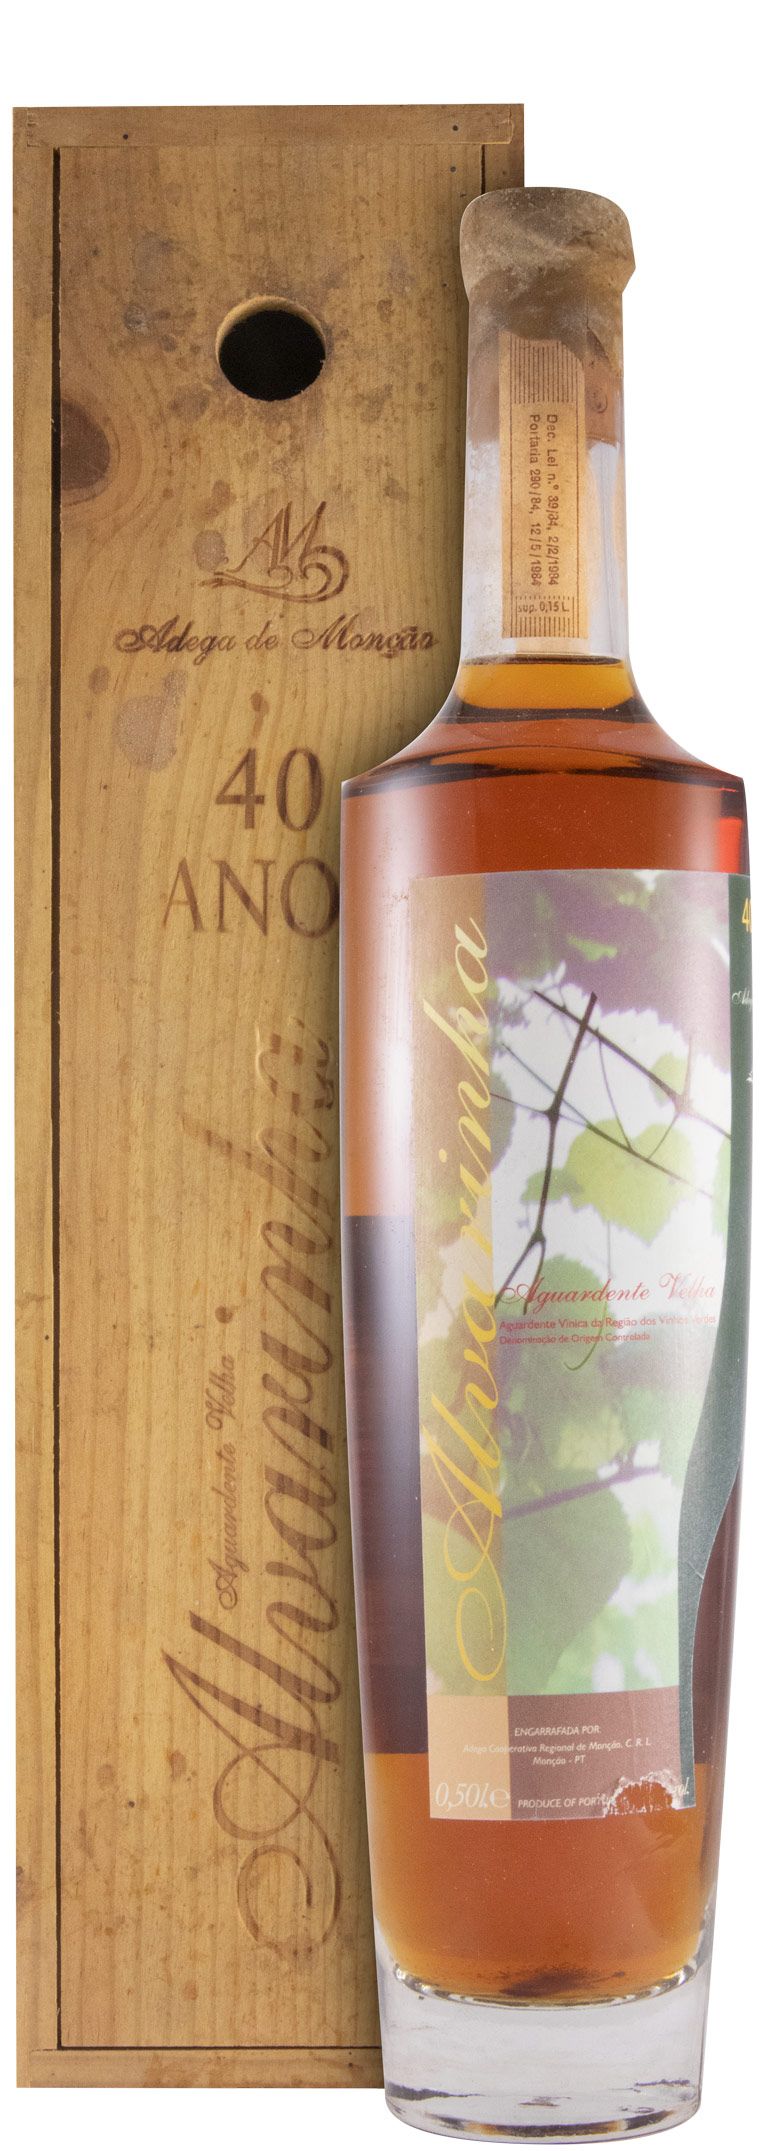 Wine Spirit Alvarinha Velha 40 years (wood case) 50cl